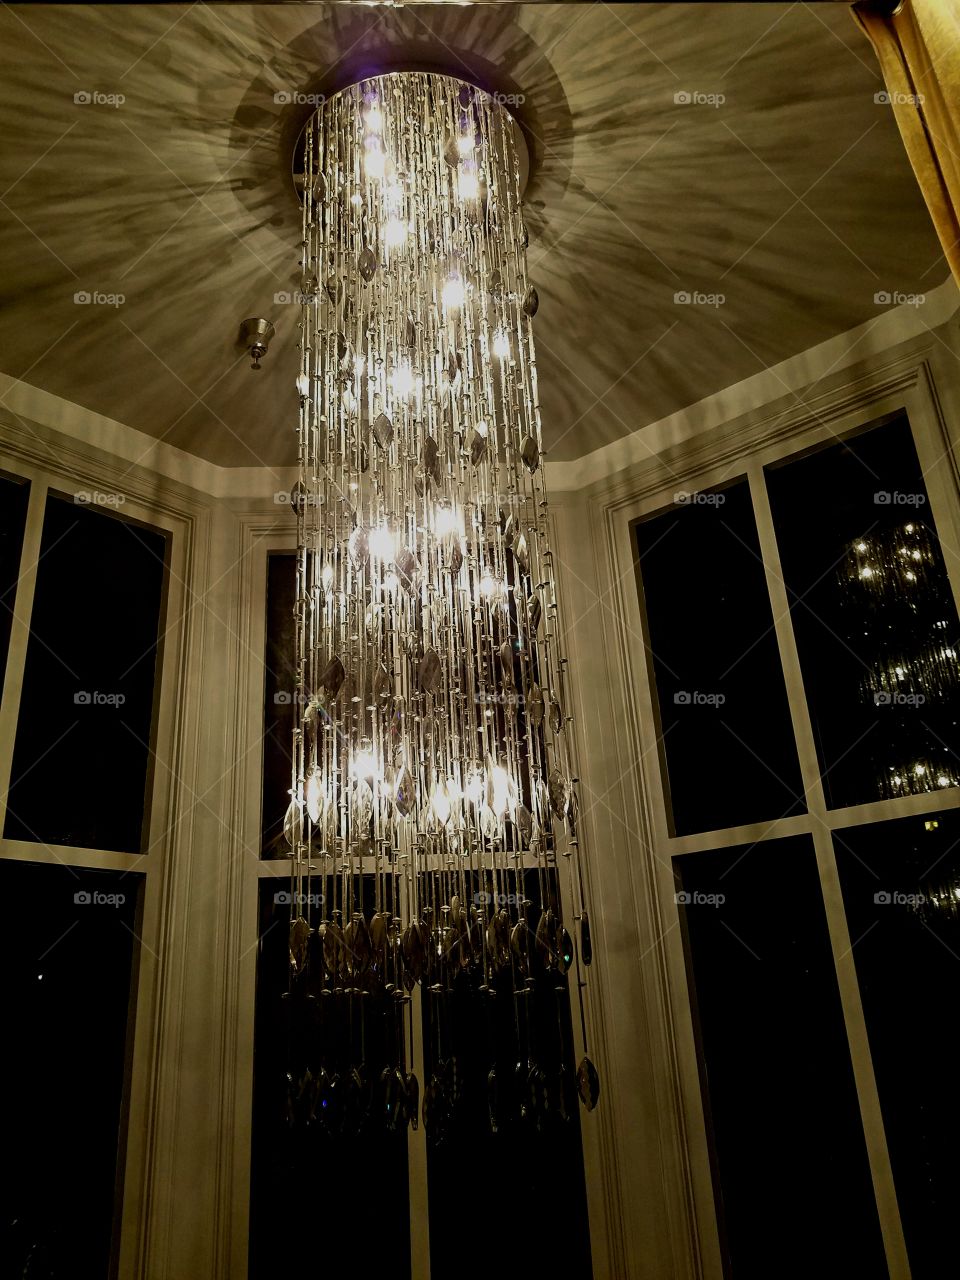 chrystal chandelier sparkle...love it